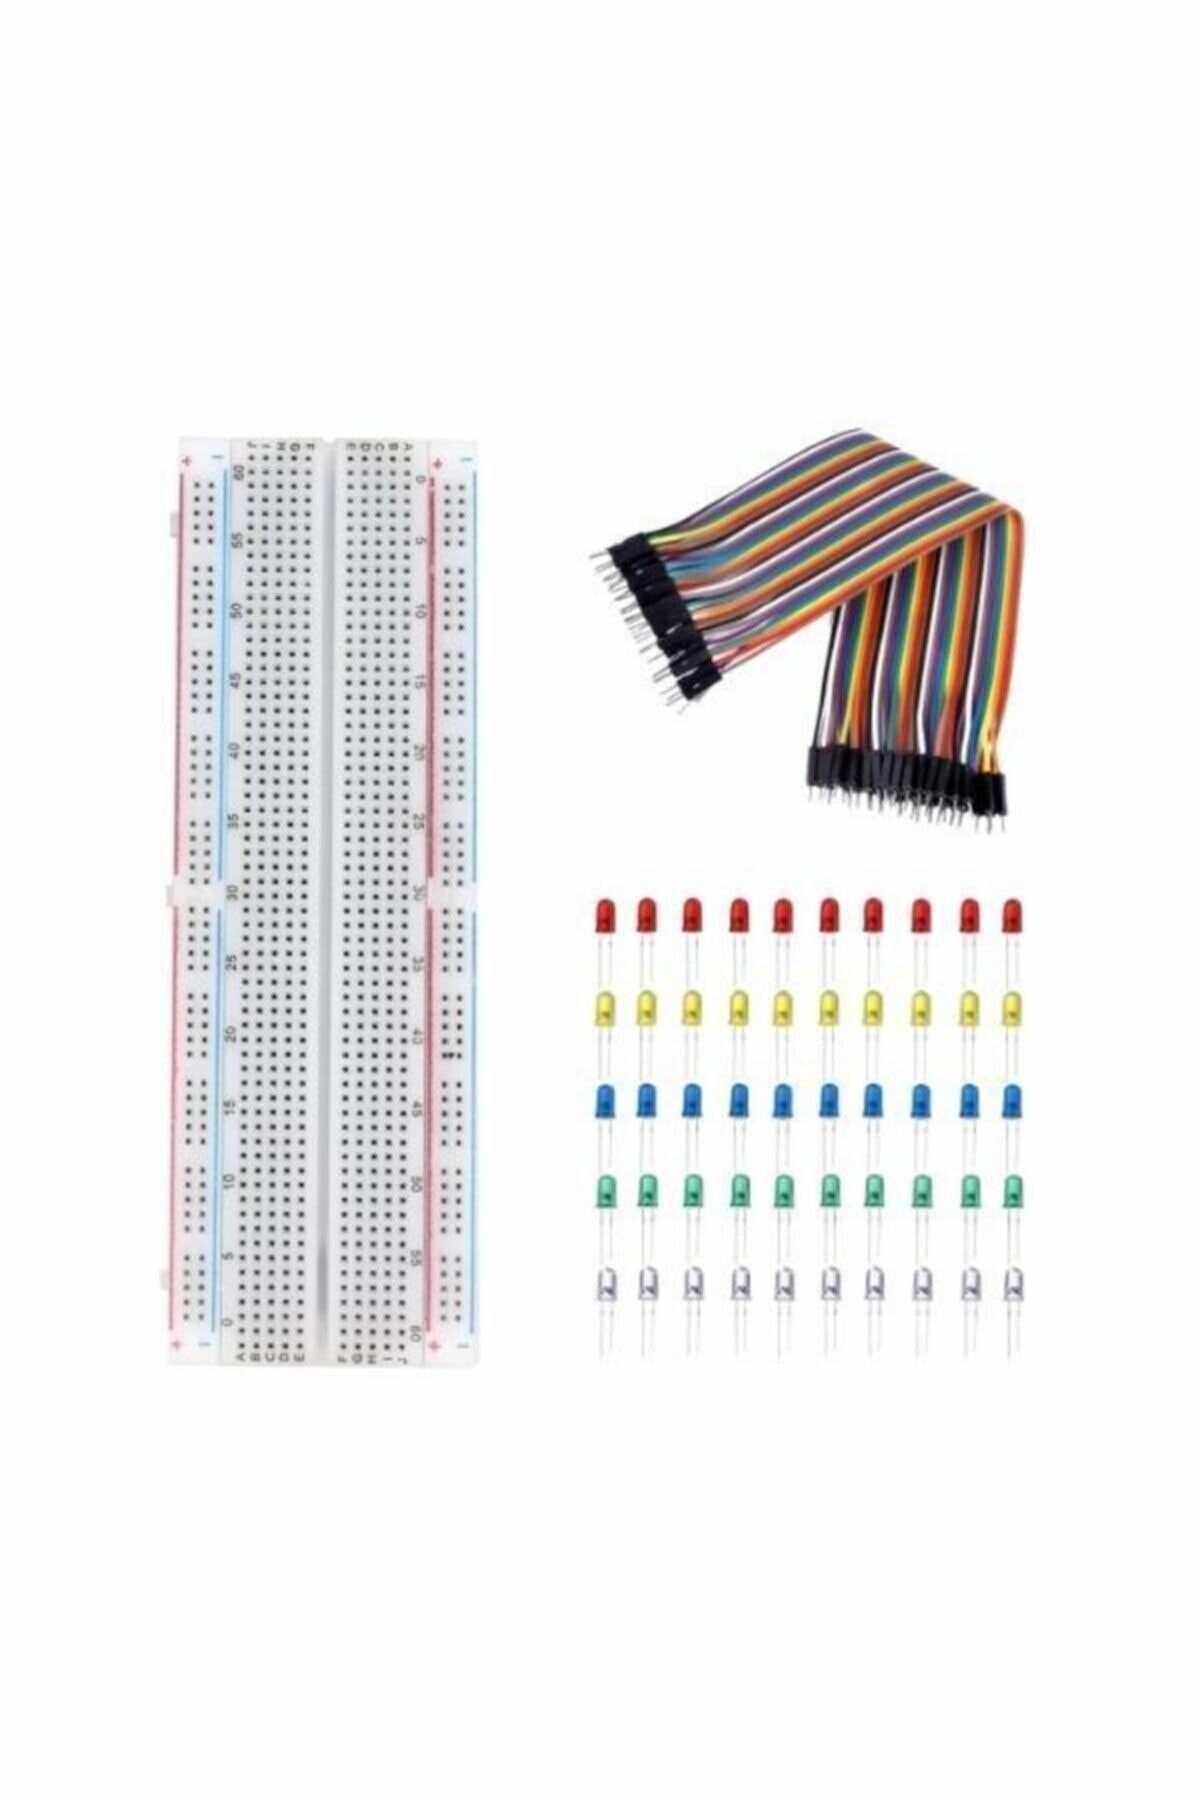 Arduino Kids Maker 3'lü Set 830 Pin Breadboard 40 Pin Erkek-erkek Jumper Kablo 50 Adet 5mm Led ( 5 Renk )